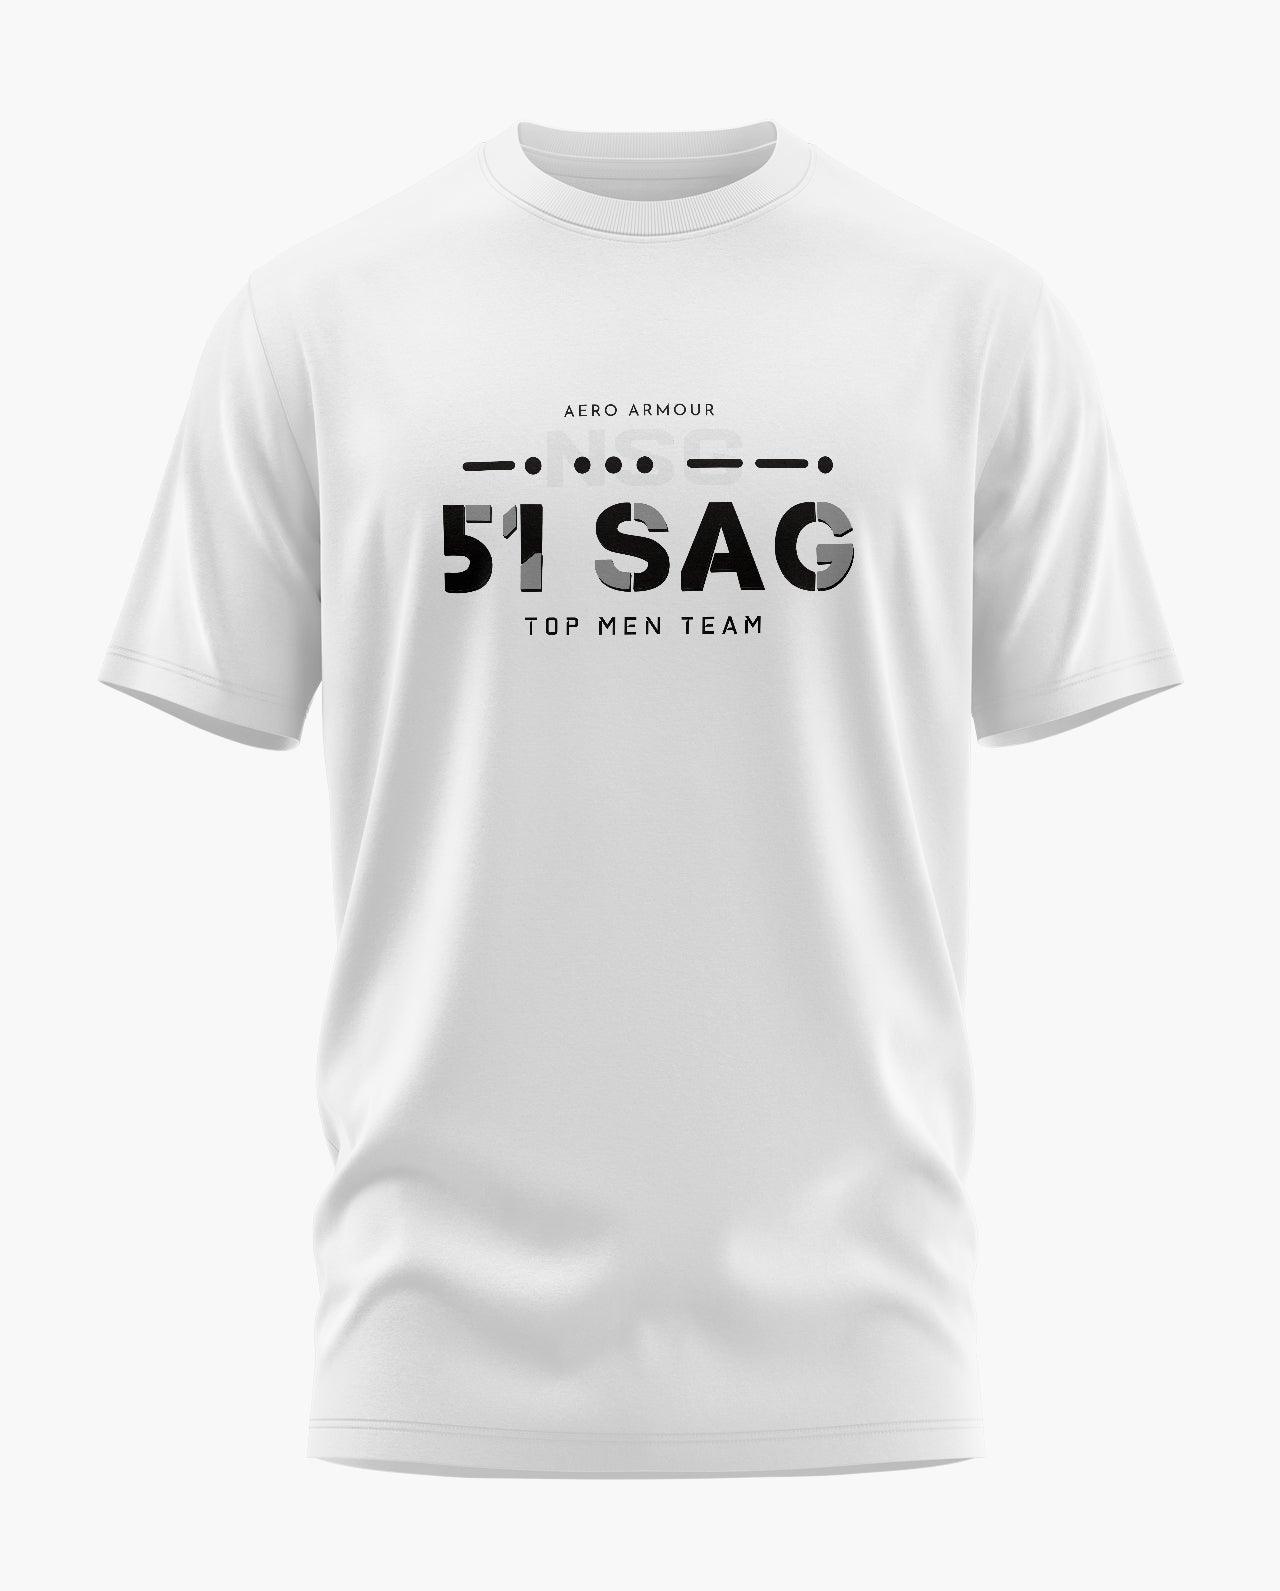 51 SAG T-Shirt - Aero Armour